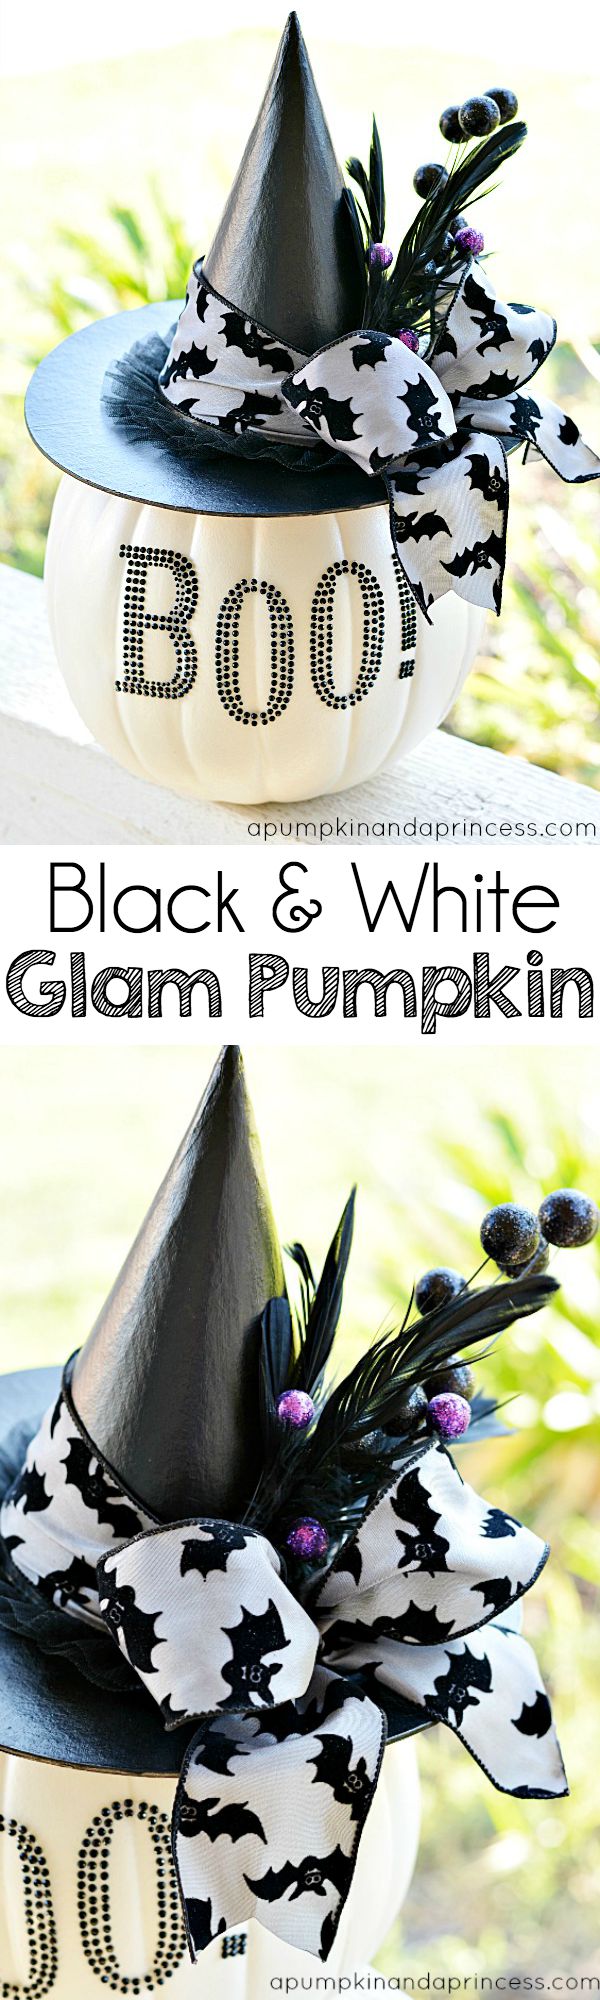 Black-and-White-Glam-Pumpkin